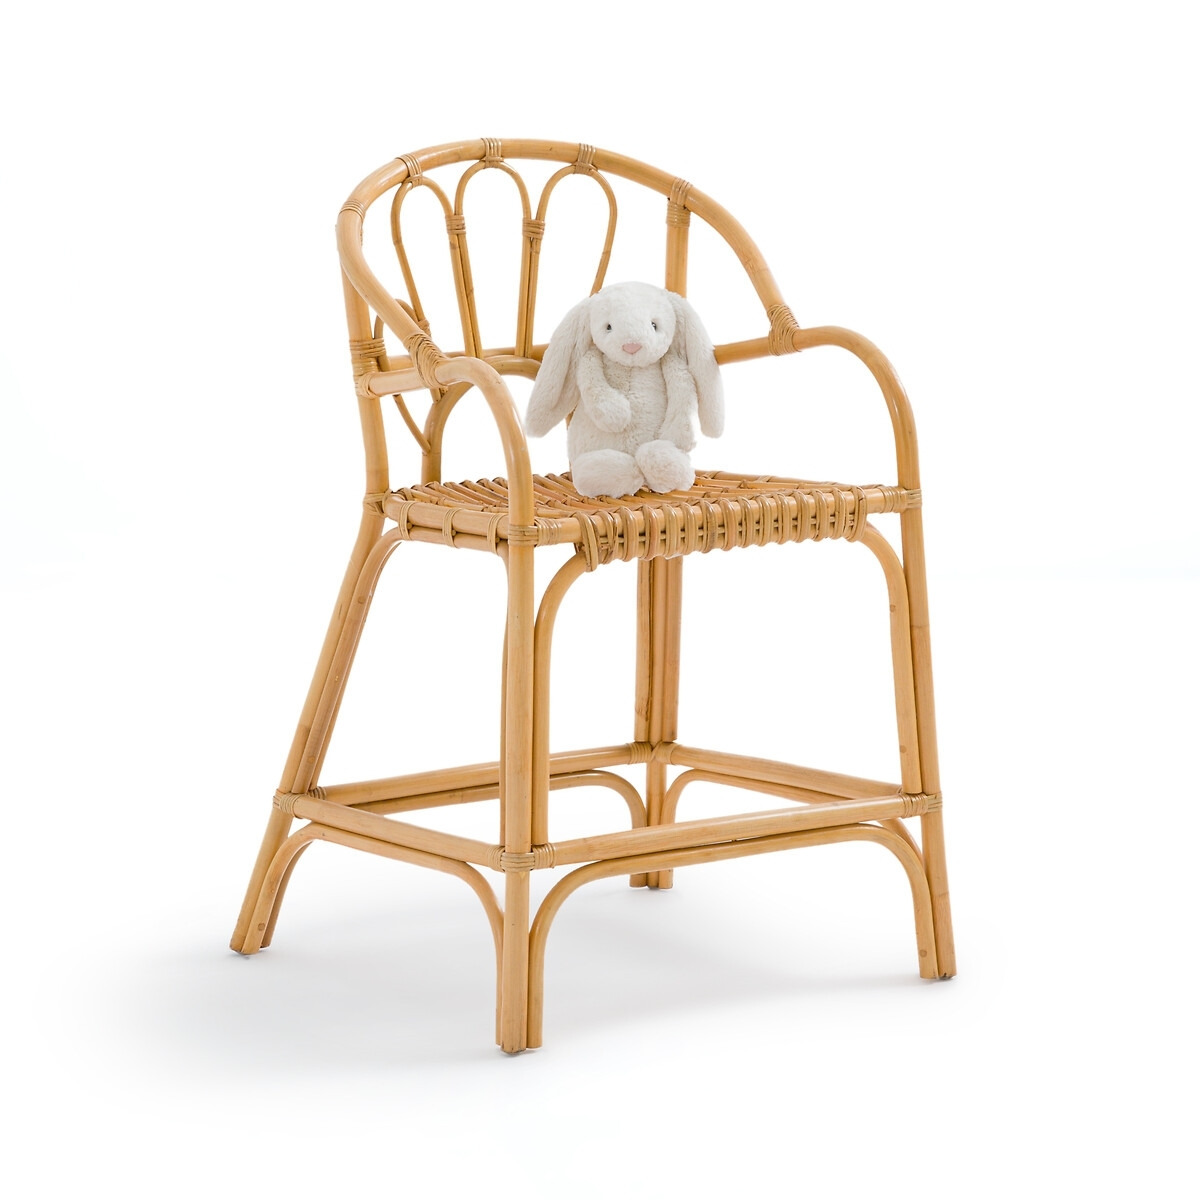 Albin Child's Rattan Chair - image 1